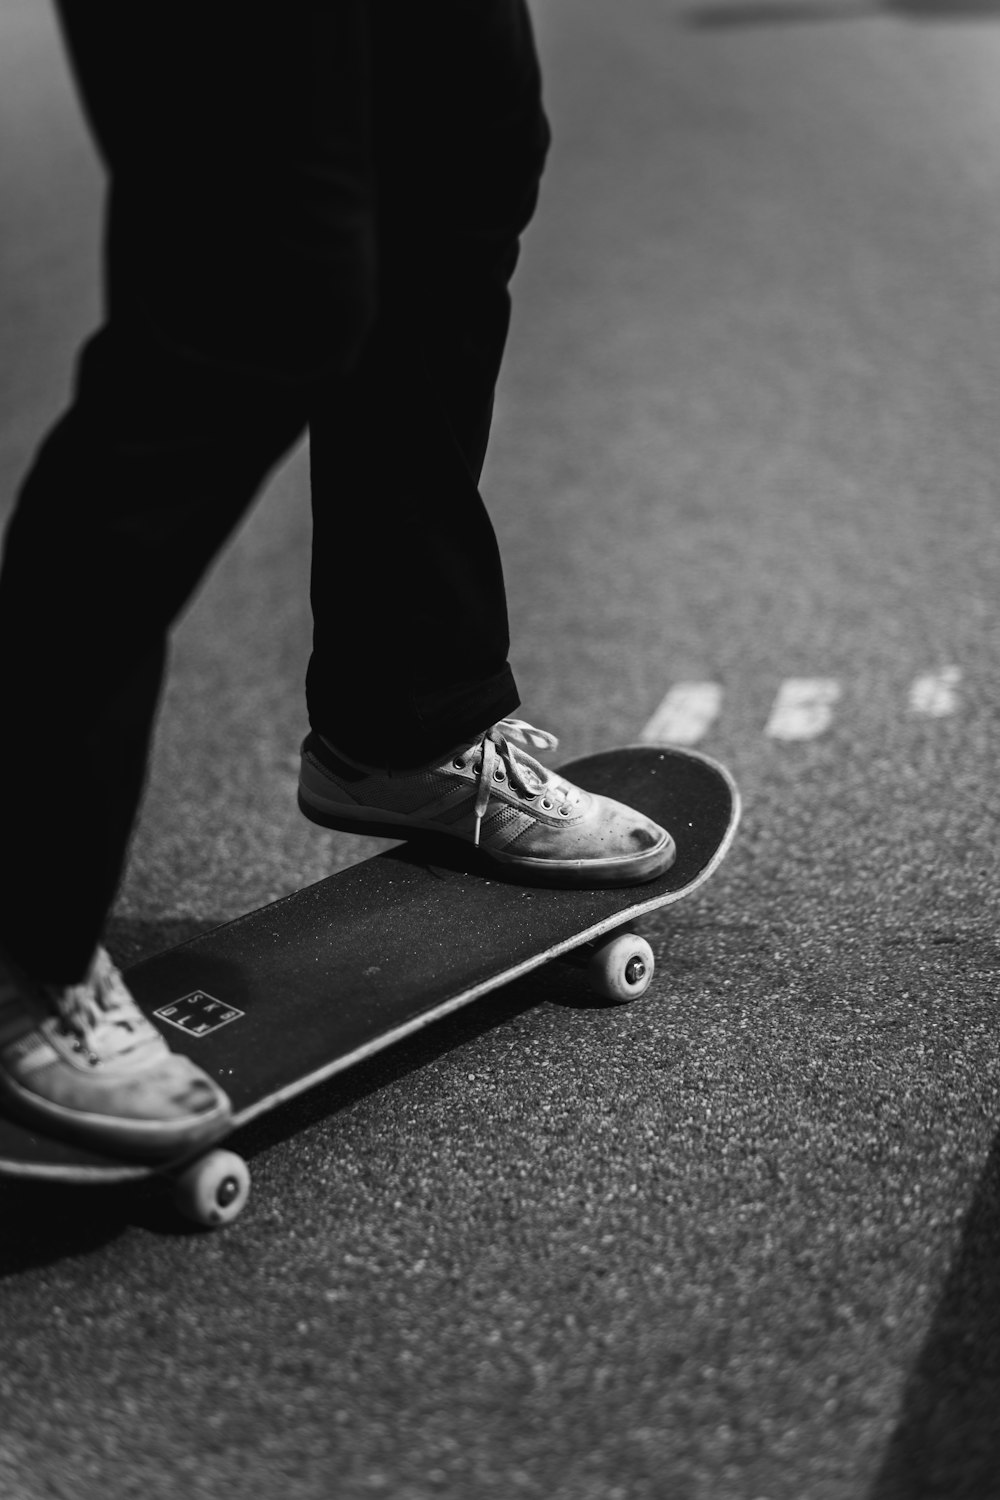 Skateboard Photo Black & White 